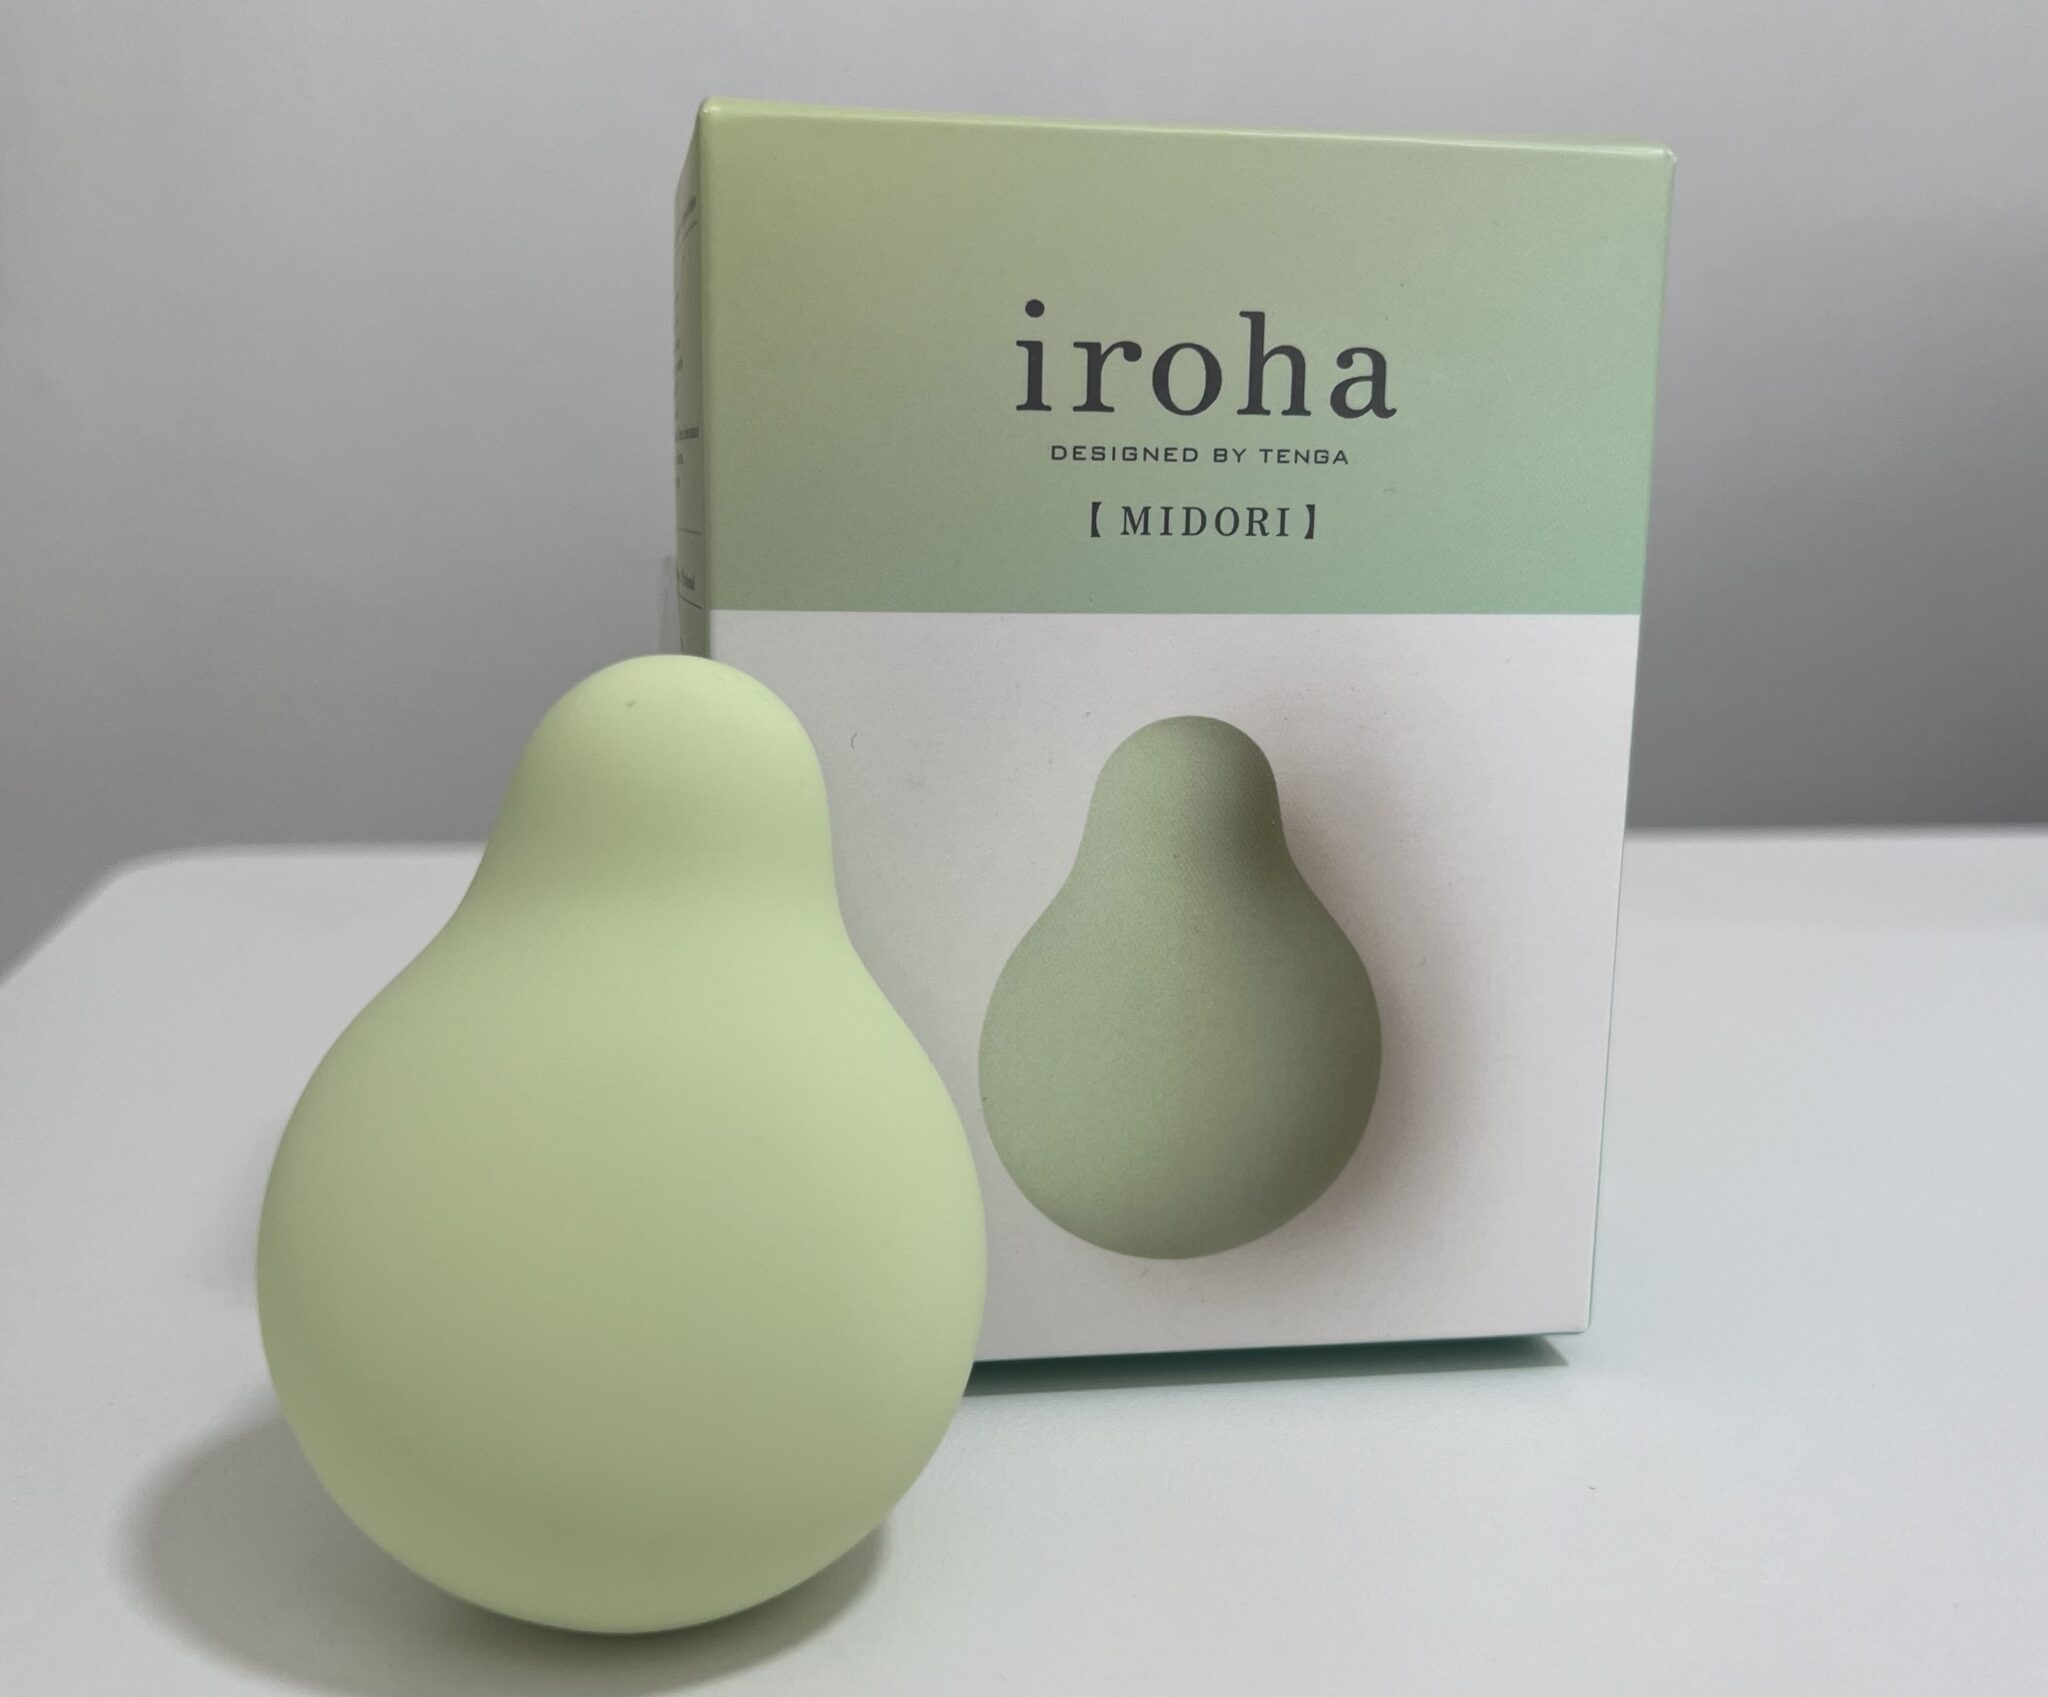 Tenga Iroha Midori The Art of Presentation: The Iroha Midori’s Packaging